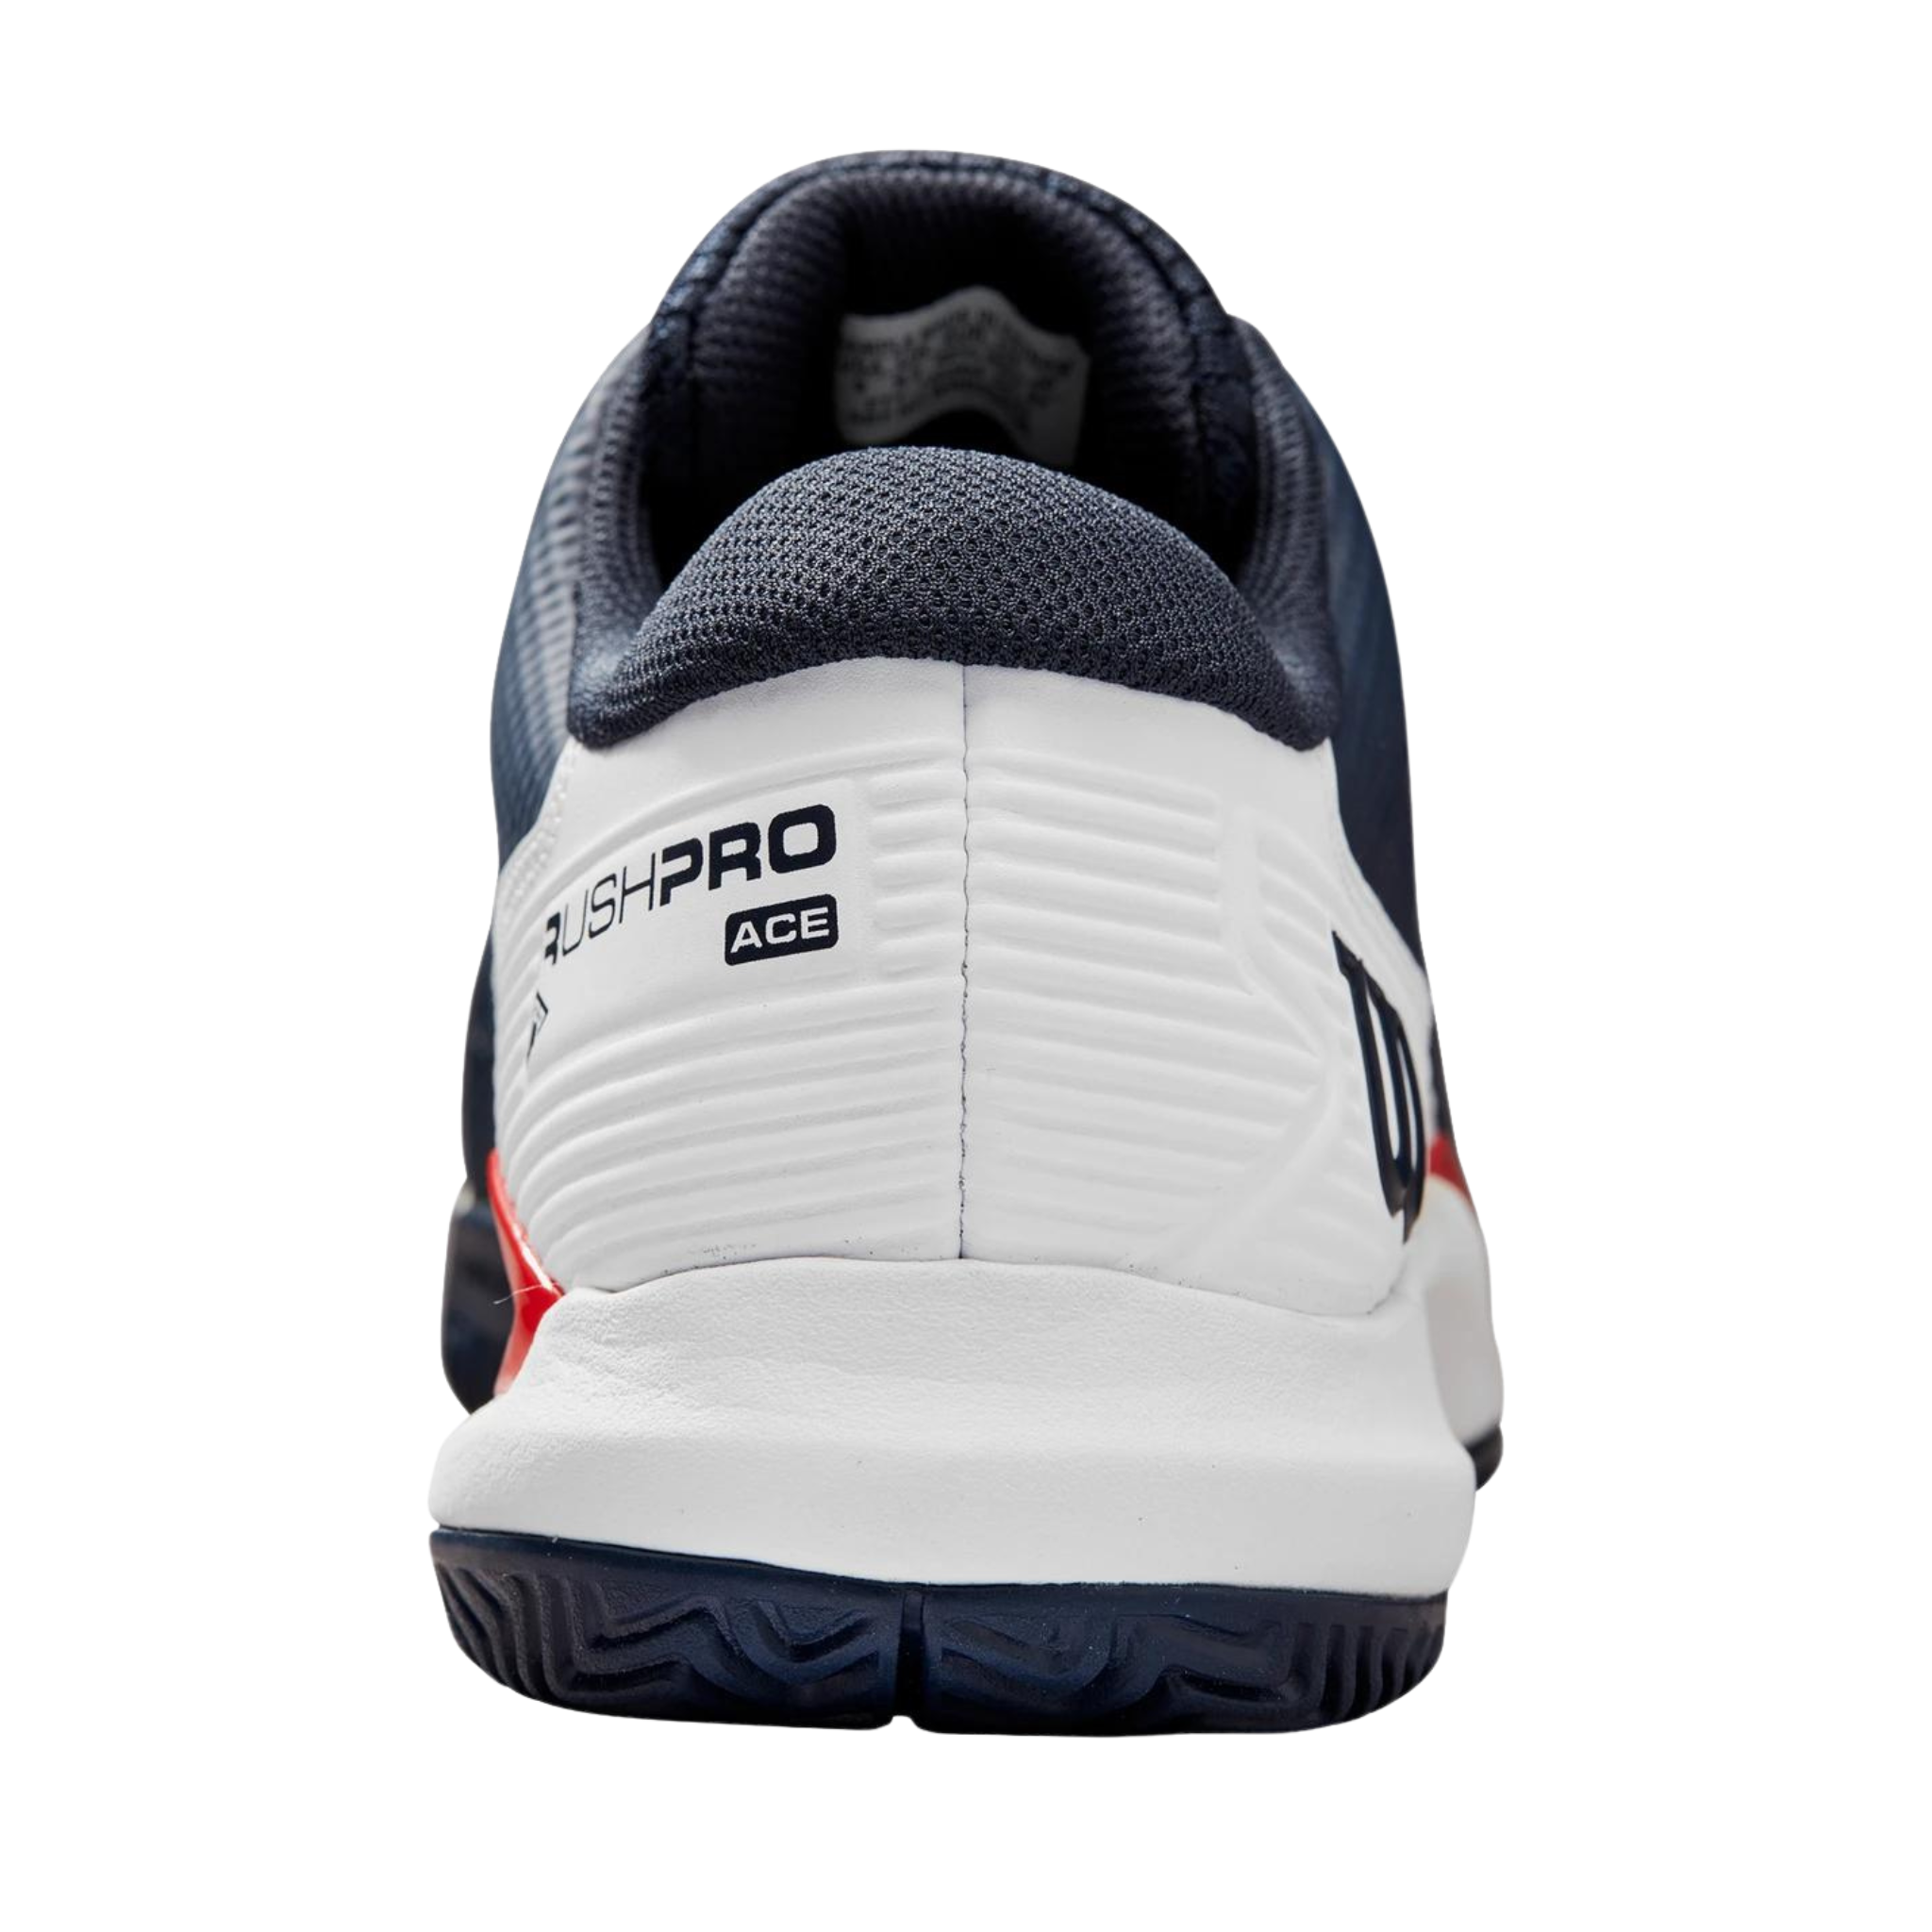 Wilson Rush Pro Ace Men's tennis shoes > Navy Blaze/White/Infrared